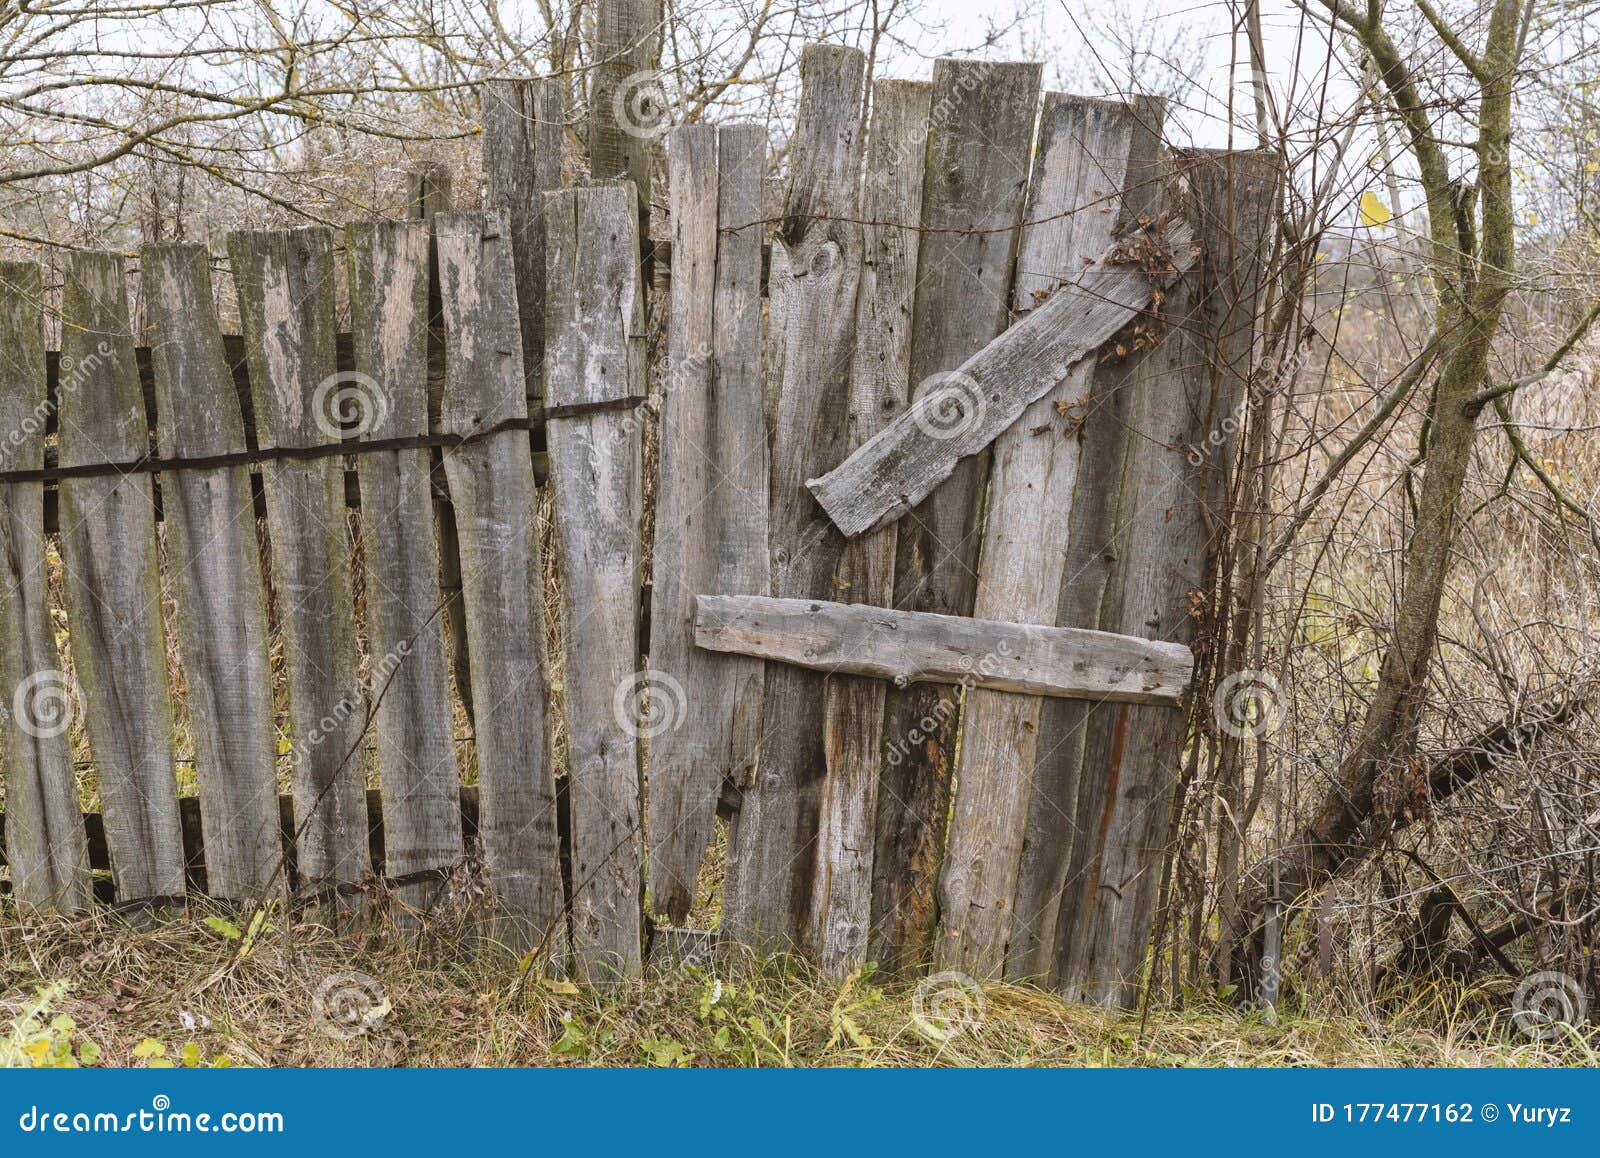 shaky wooden fence